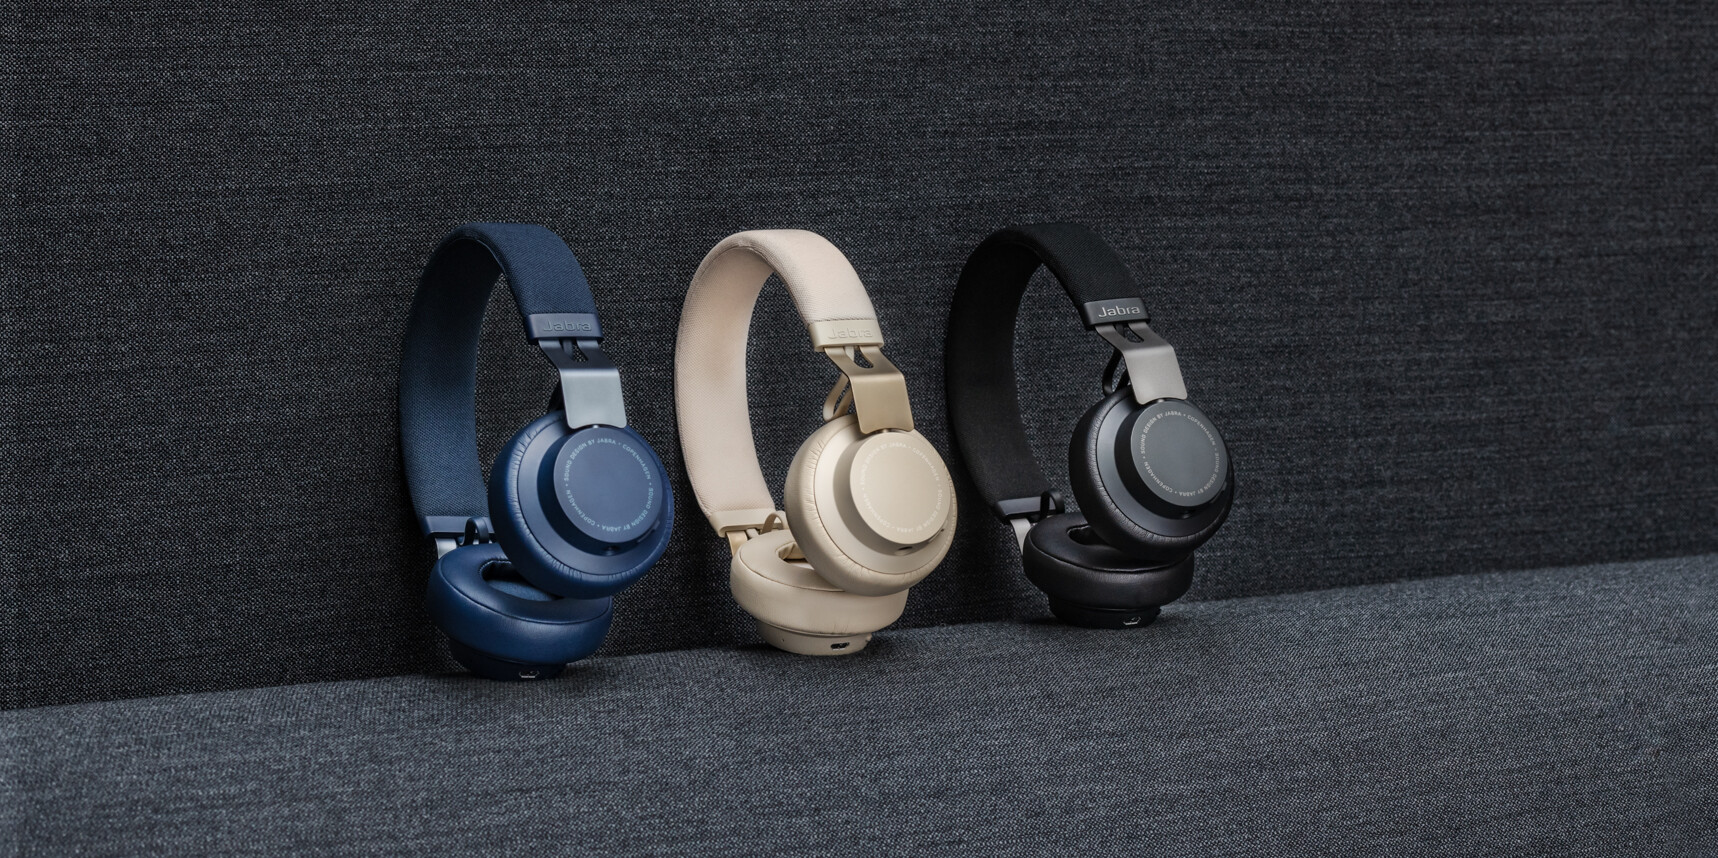 Jabra Elite 85h headphones (navy, beige, and black) against dark gray background.